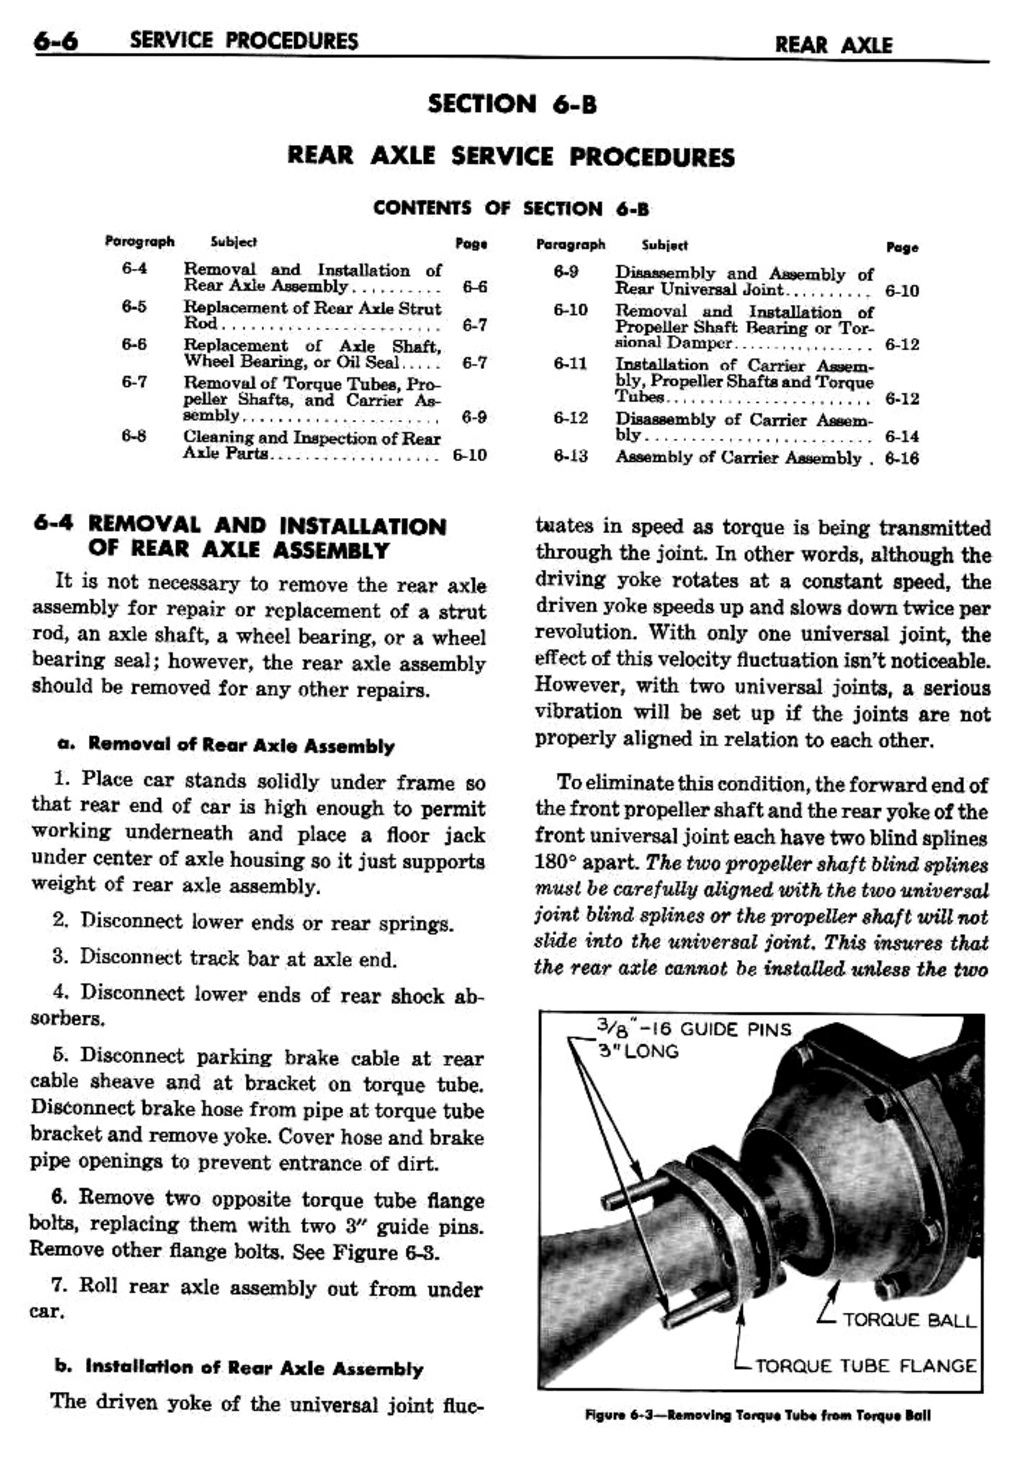 n_07 1960 Buick Shop Manual - Rear Axle-006-006.jpg